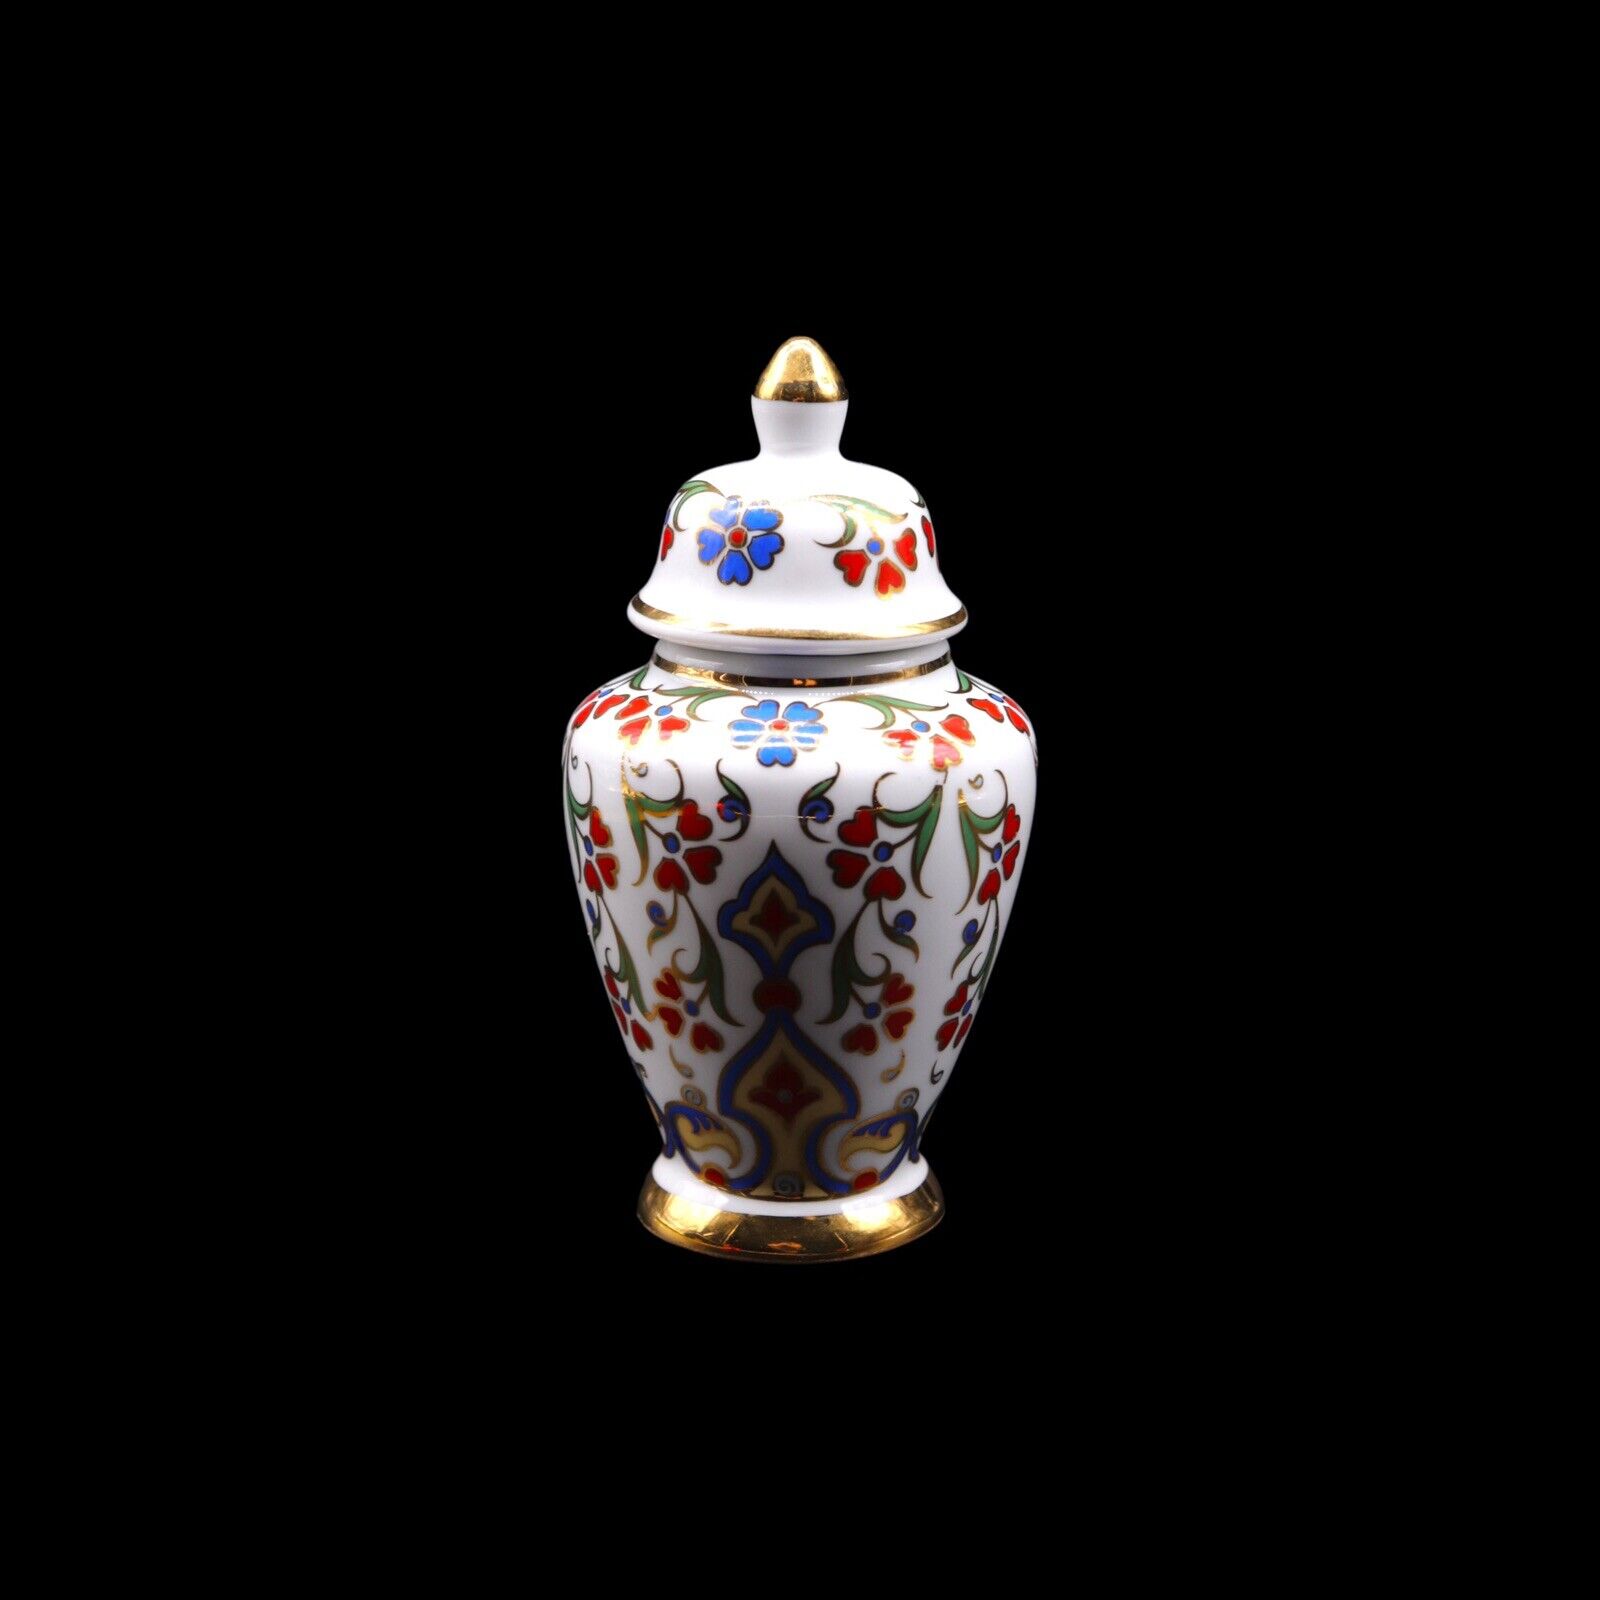 Güral Porselen Turkish Porcelain Miniature Lidded Urn with Original Box